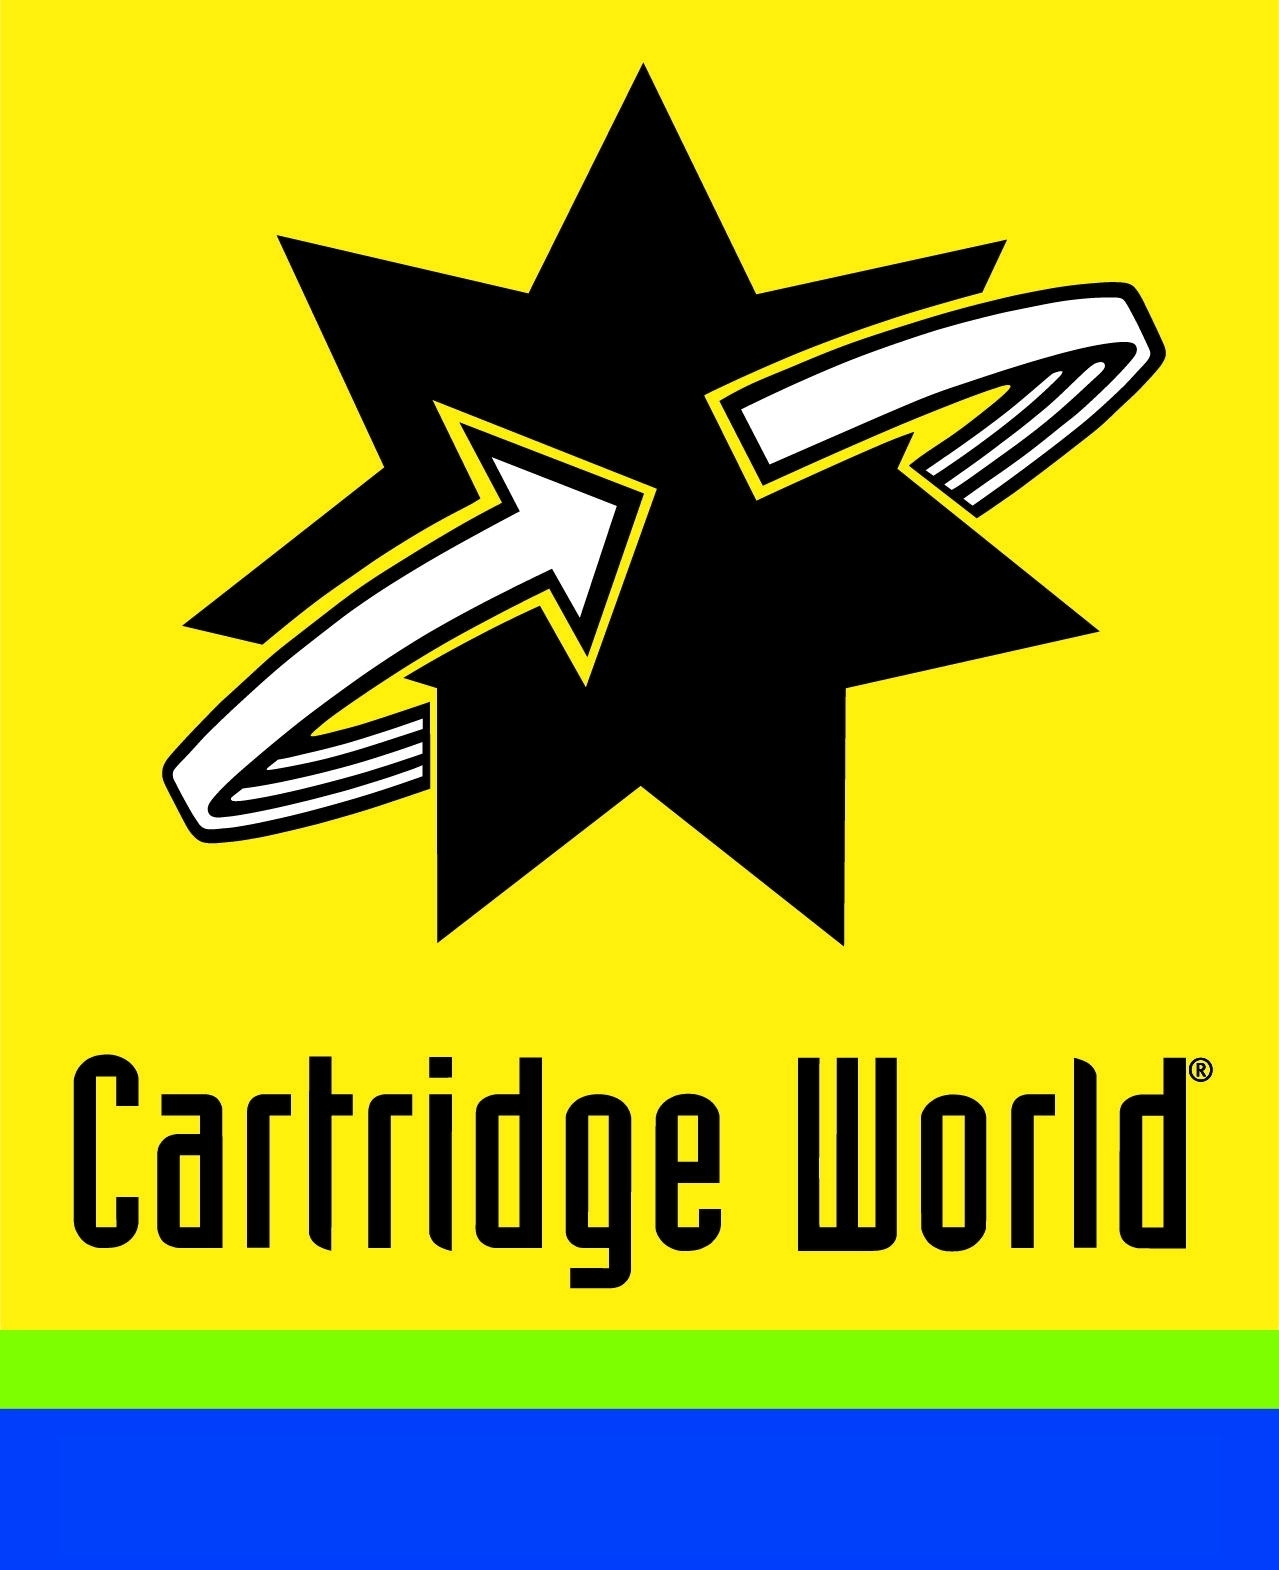 Cartridge World Manchester Central